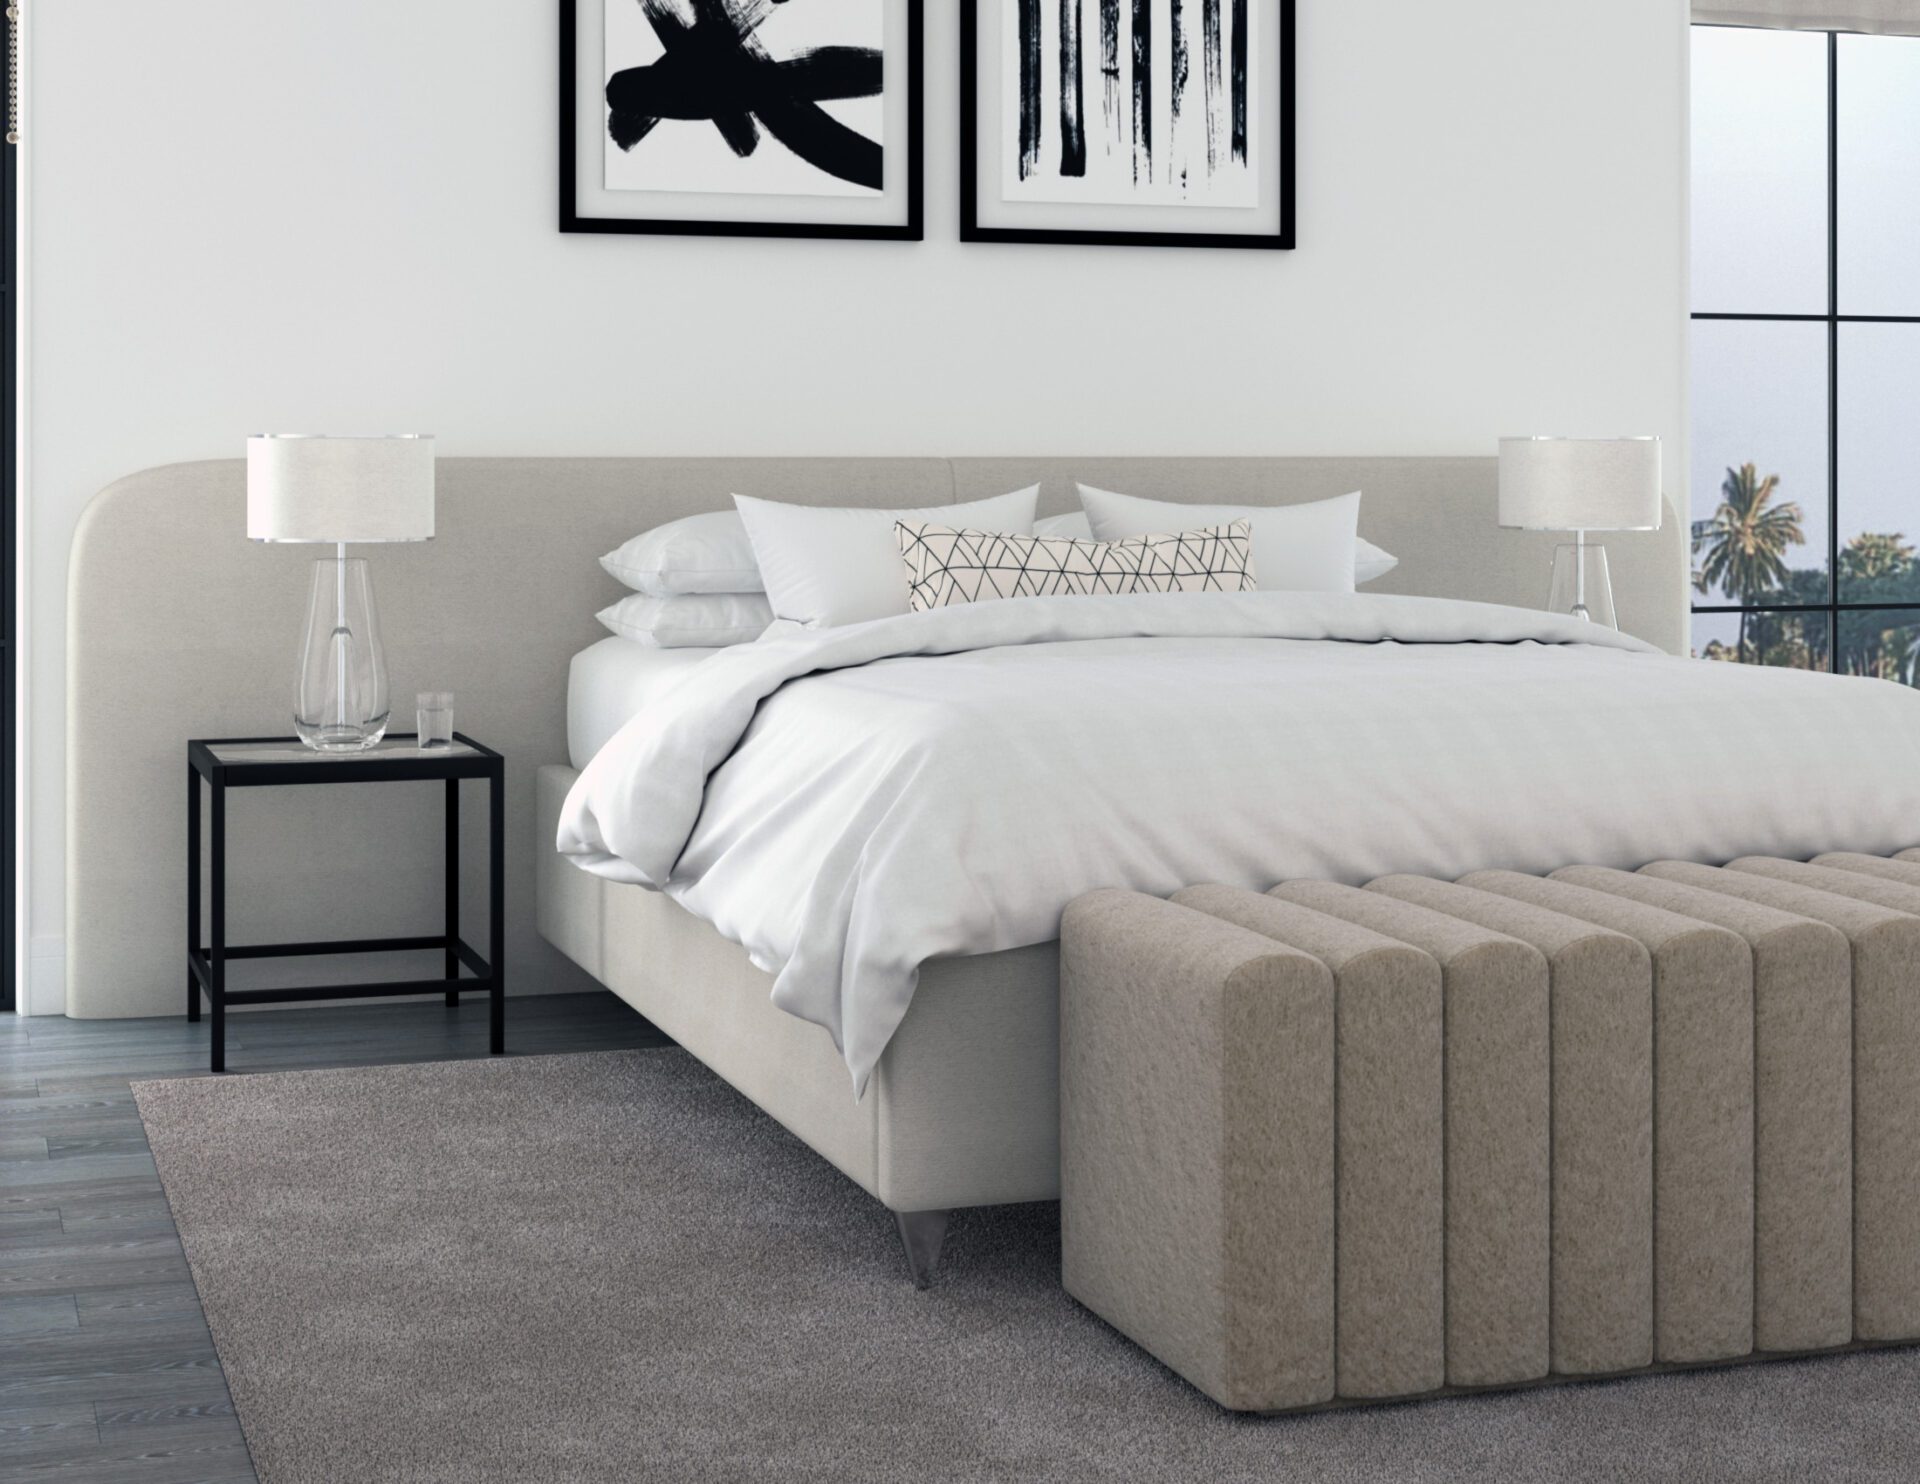 WAYWARD-freestanding-upholstered-bed-luxury-furniture-blend-home-furnishings-interior-design